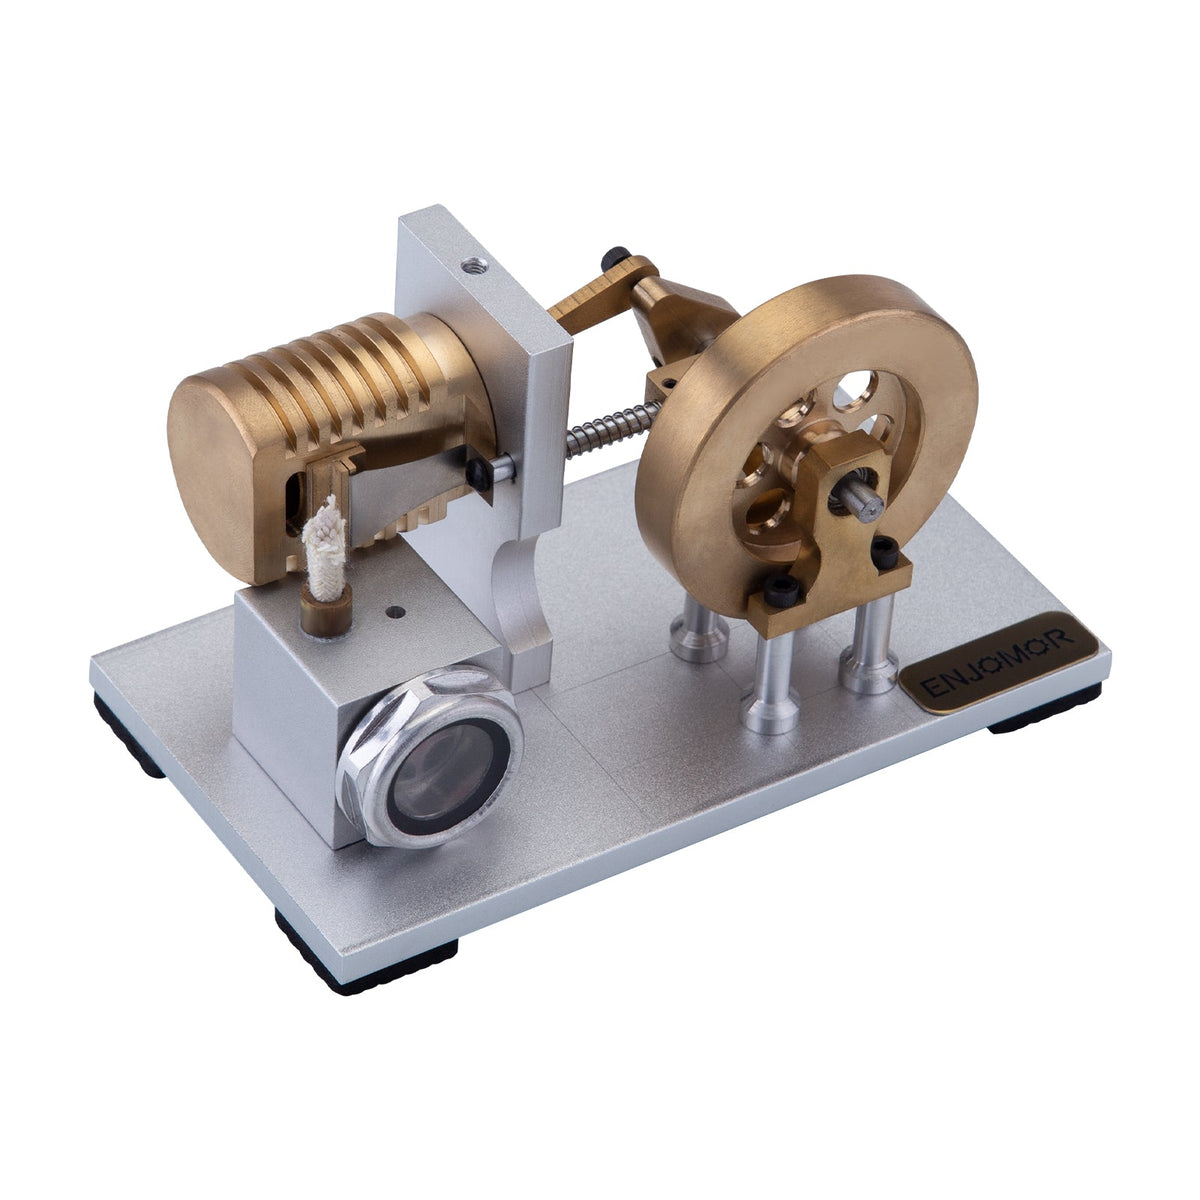 ENJOMOR Flame Eater Vacuum Stirling Engine External Combustion Engine Thermal Engine Science Education Toy